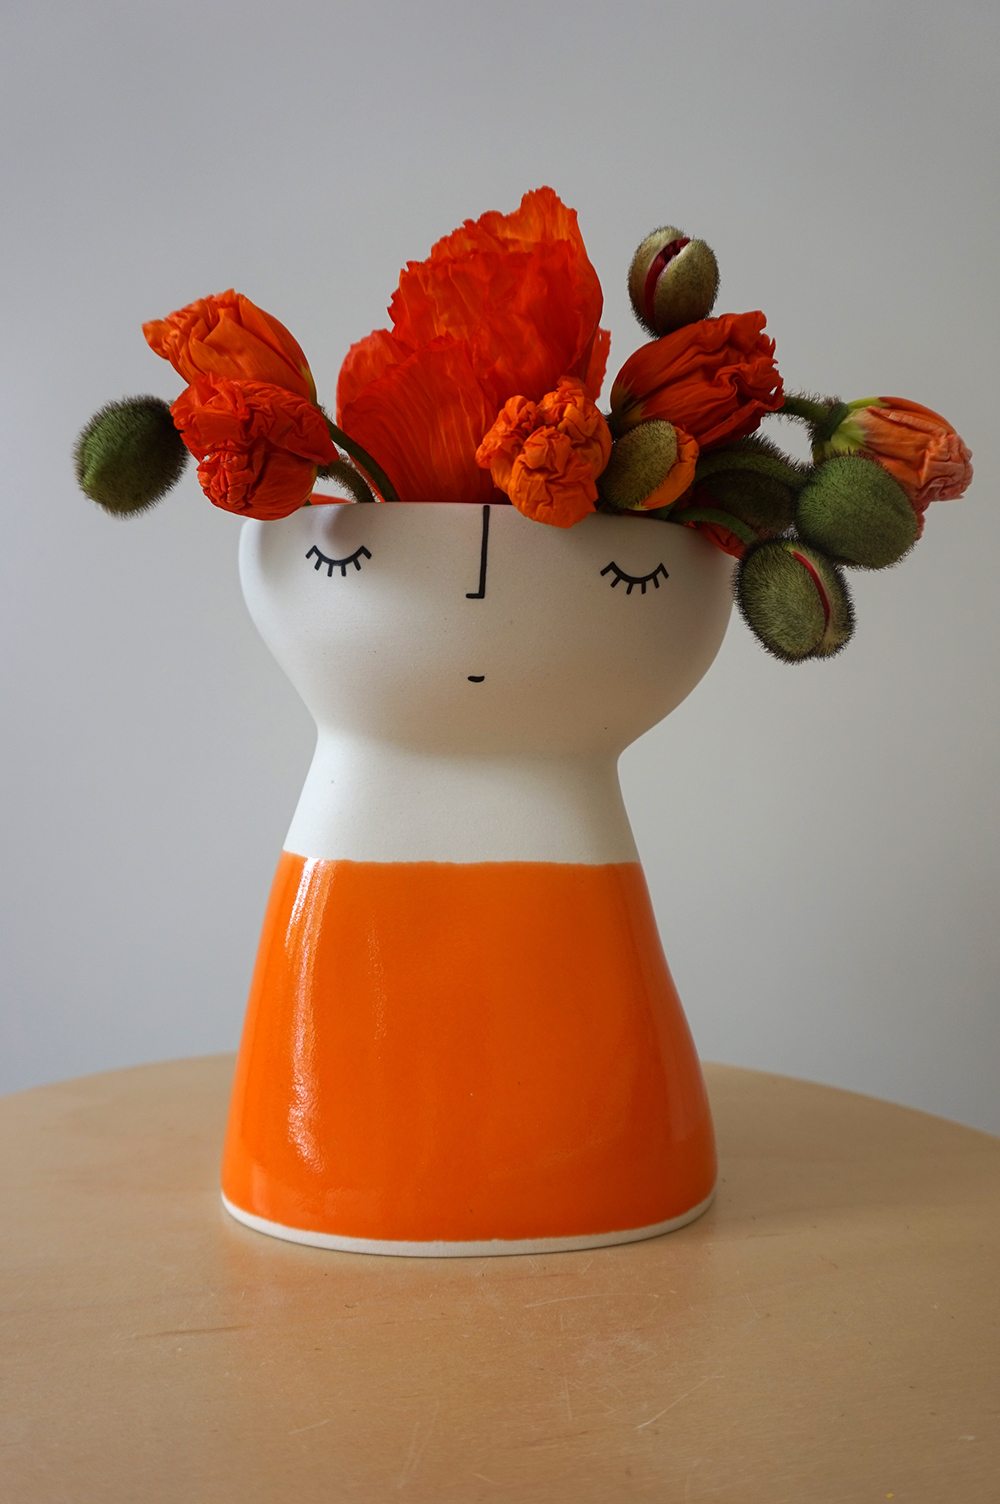 Curvy Vase $170